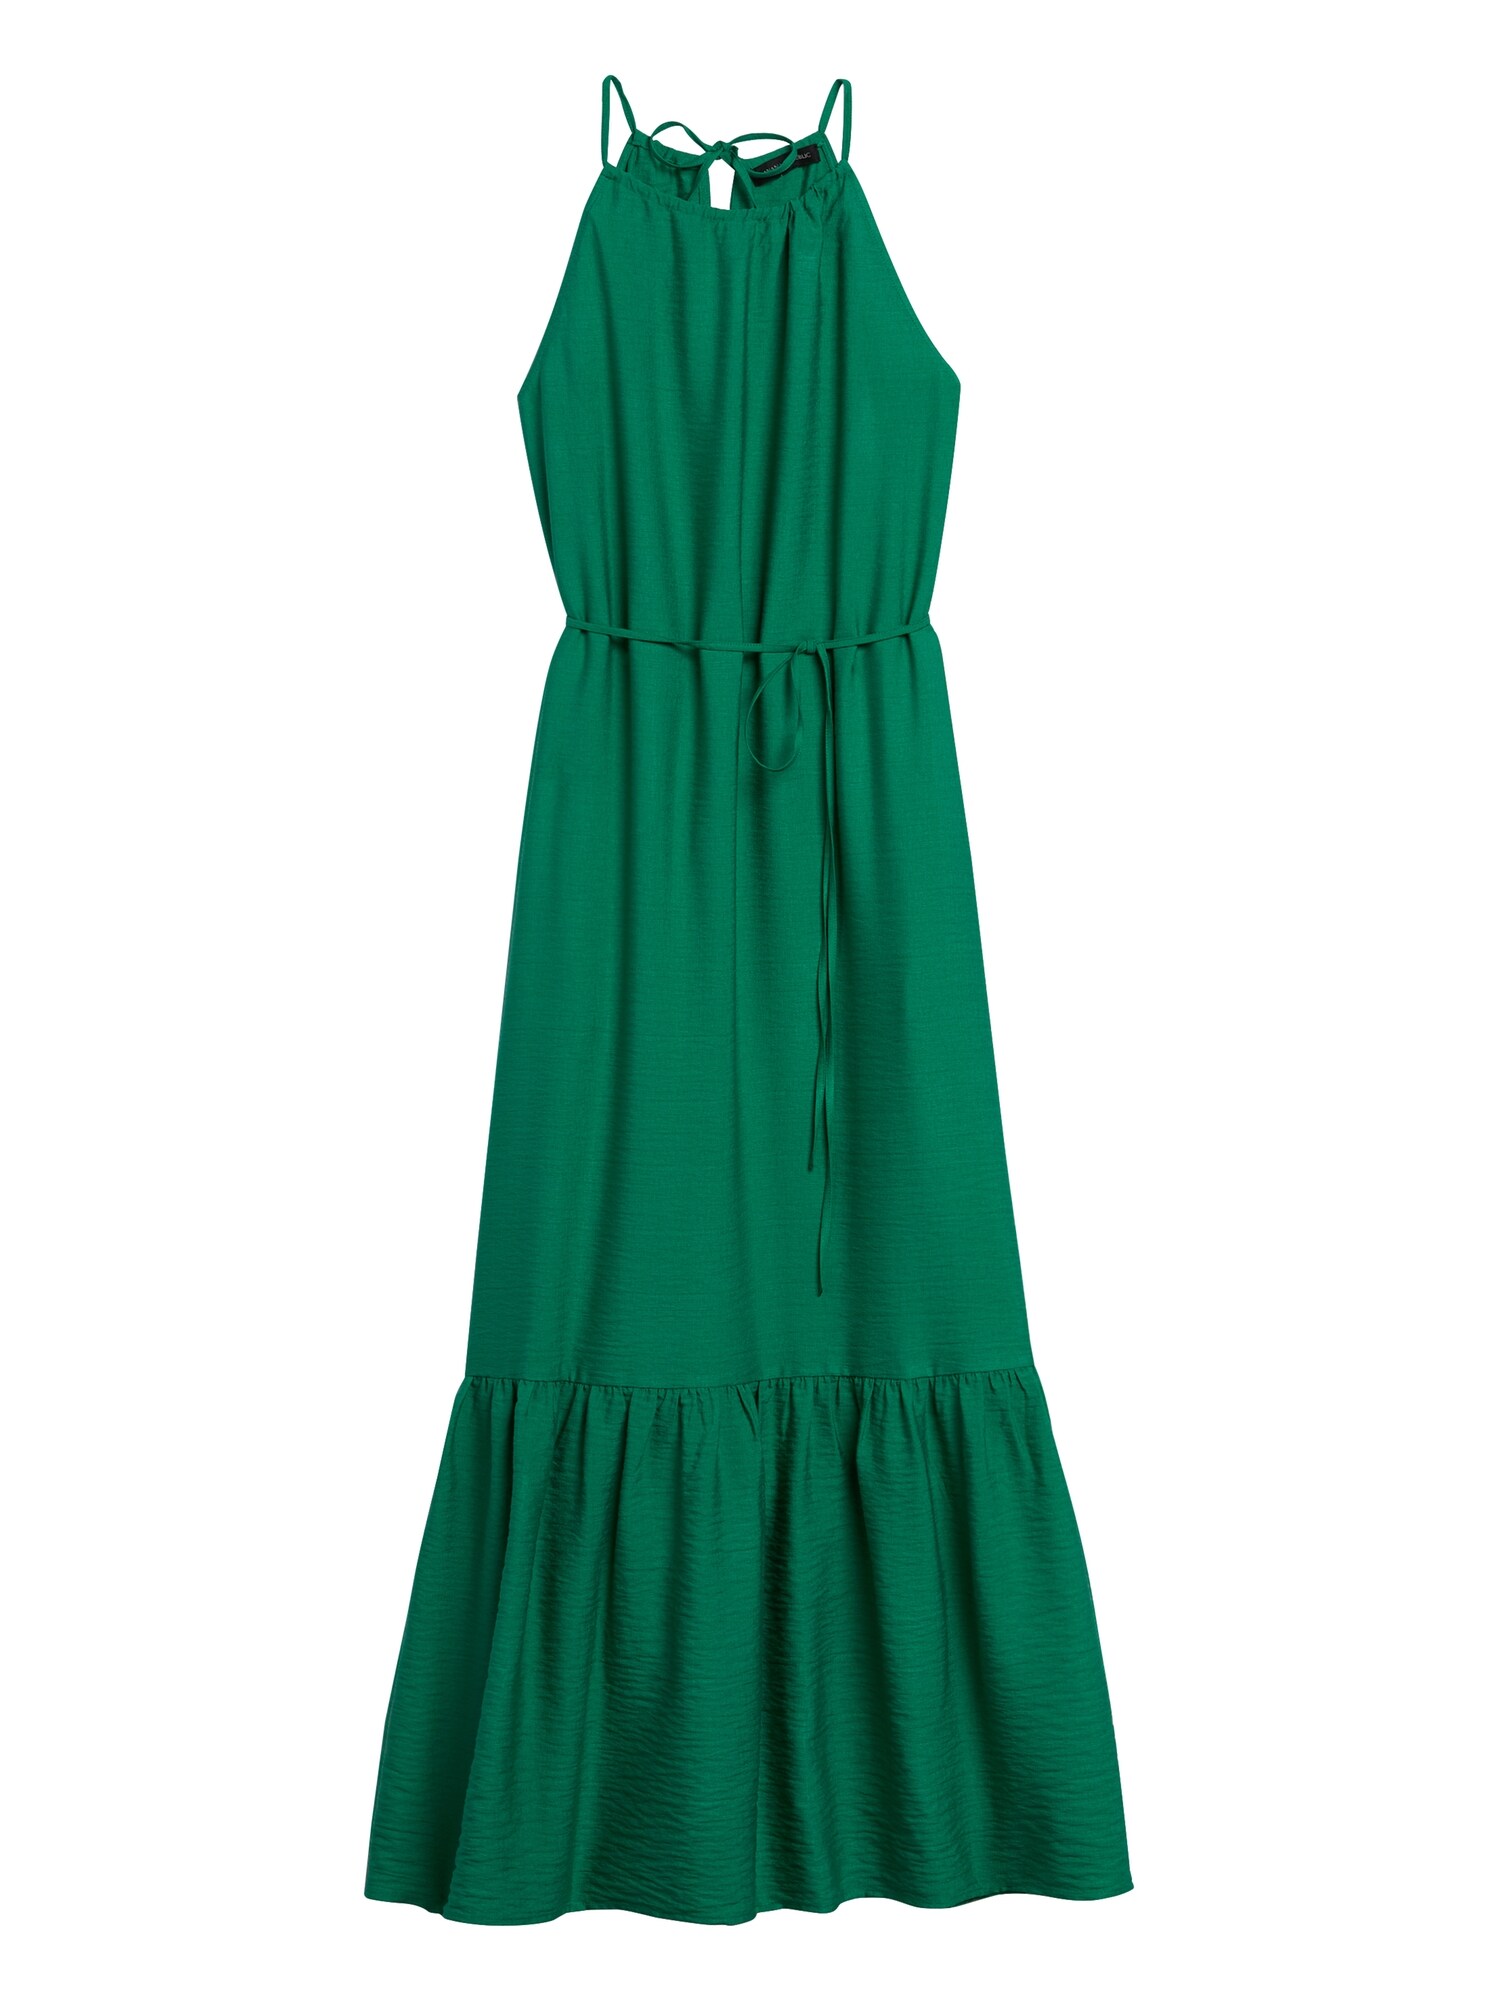 petite green dress